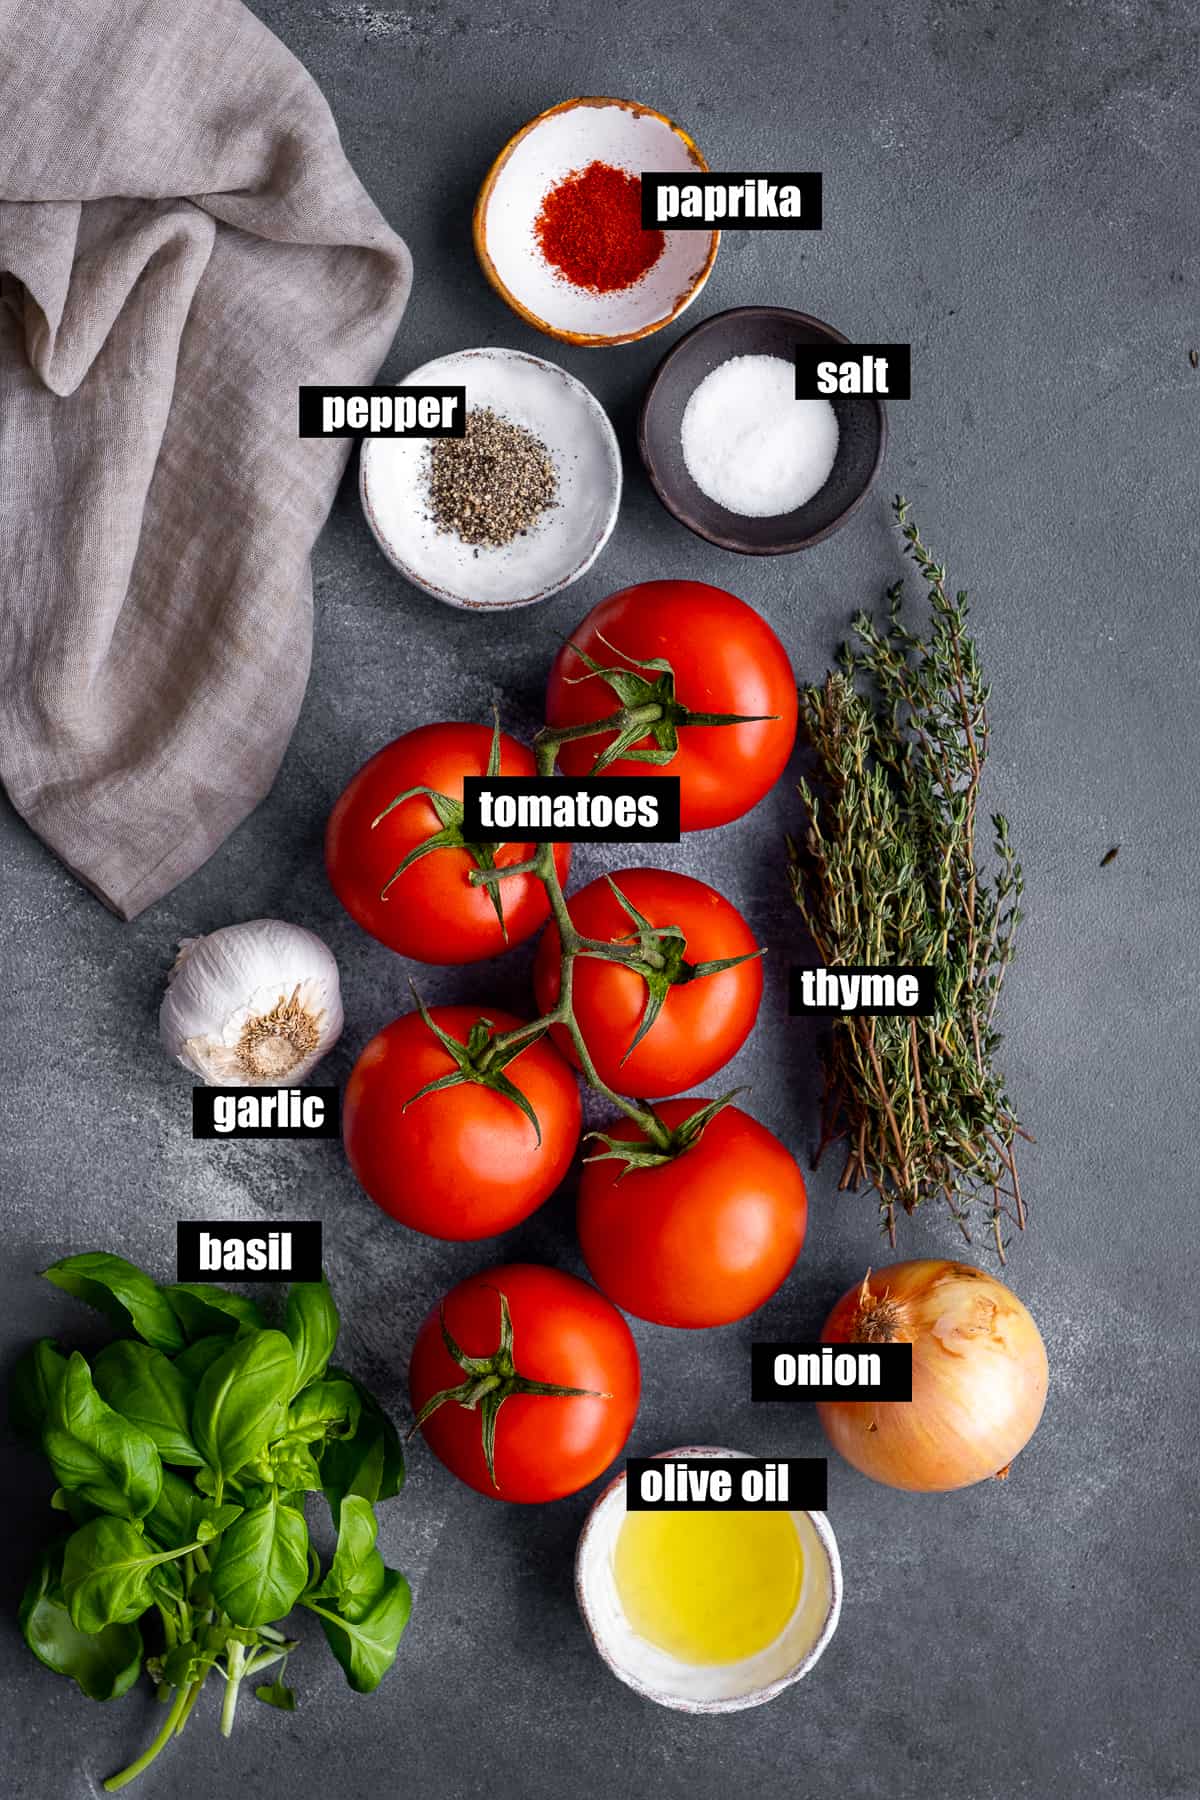 Tomatoes, onion, garlic, oil, basil, thyme, paprika, salt and pepper on a dark grey backdrop.